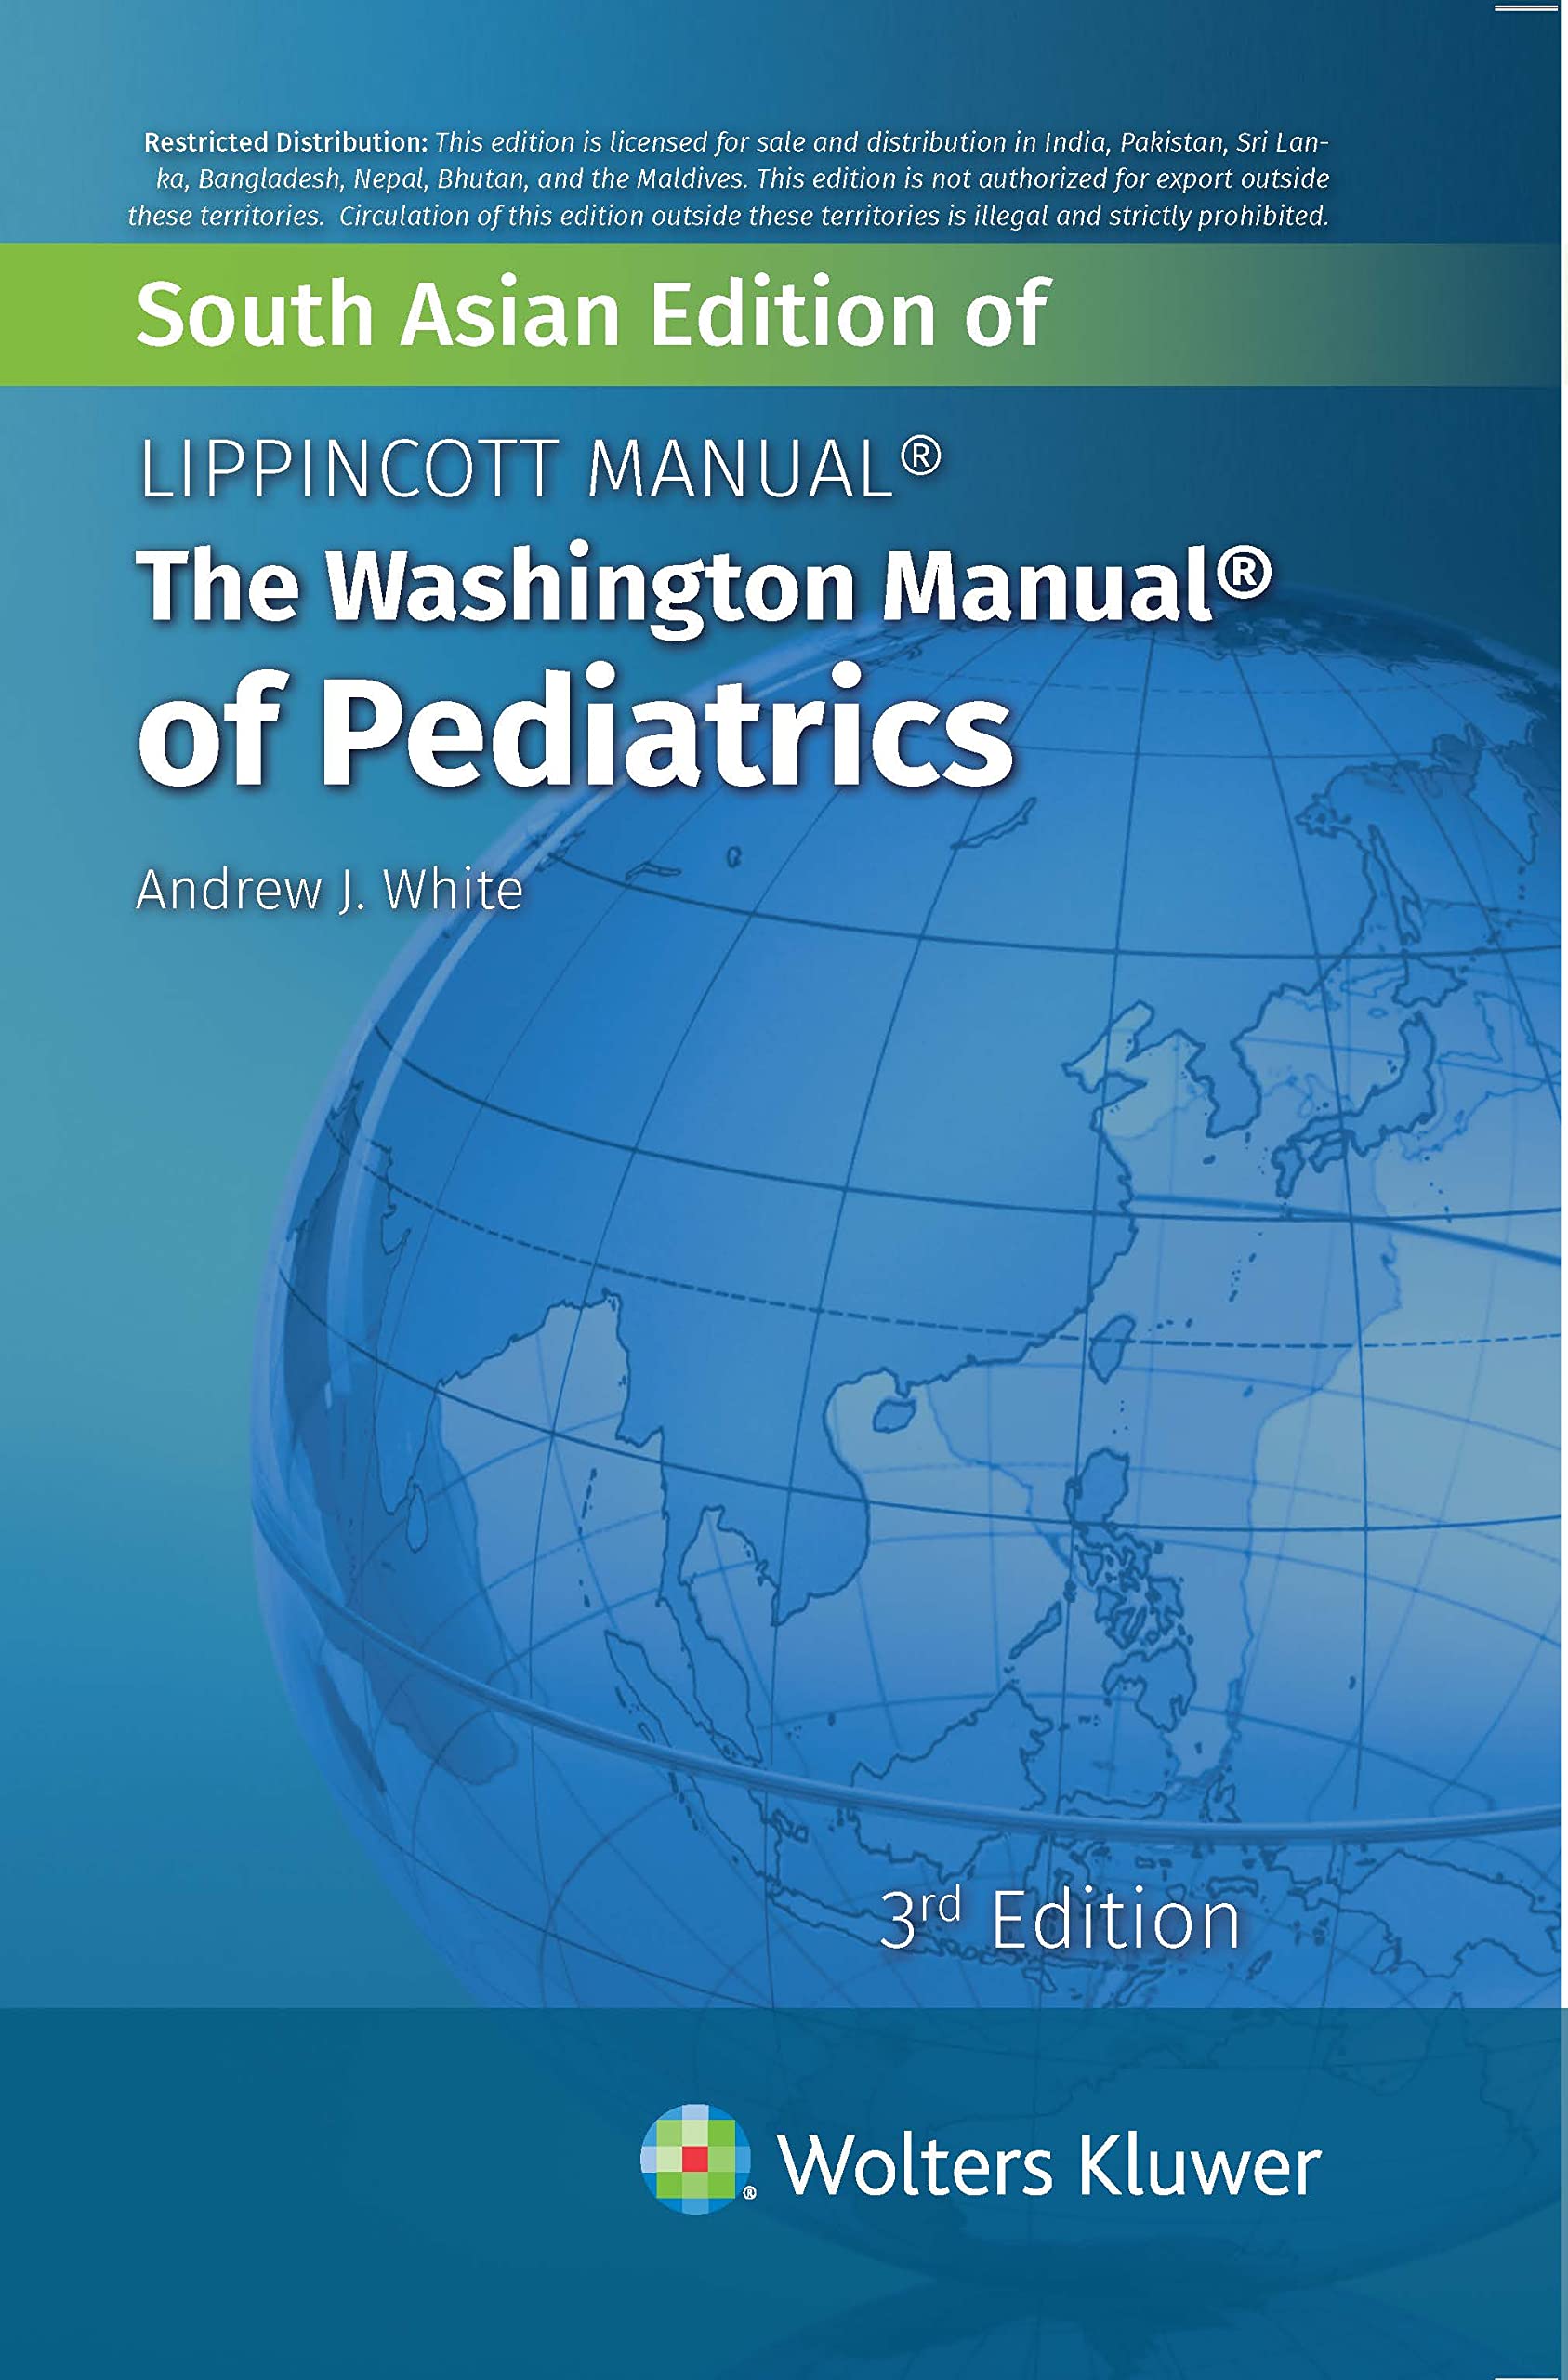 The Washington Manual of Pediatrics, 3rd edition